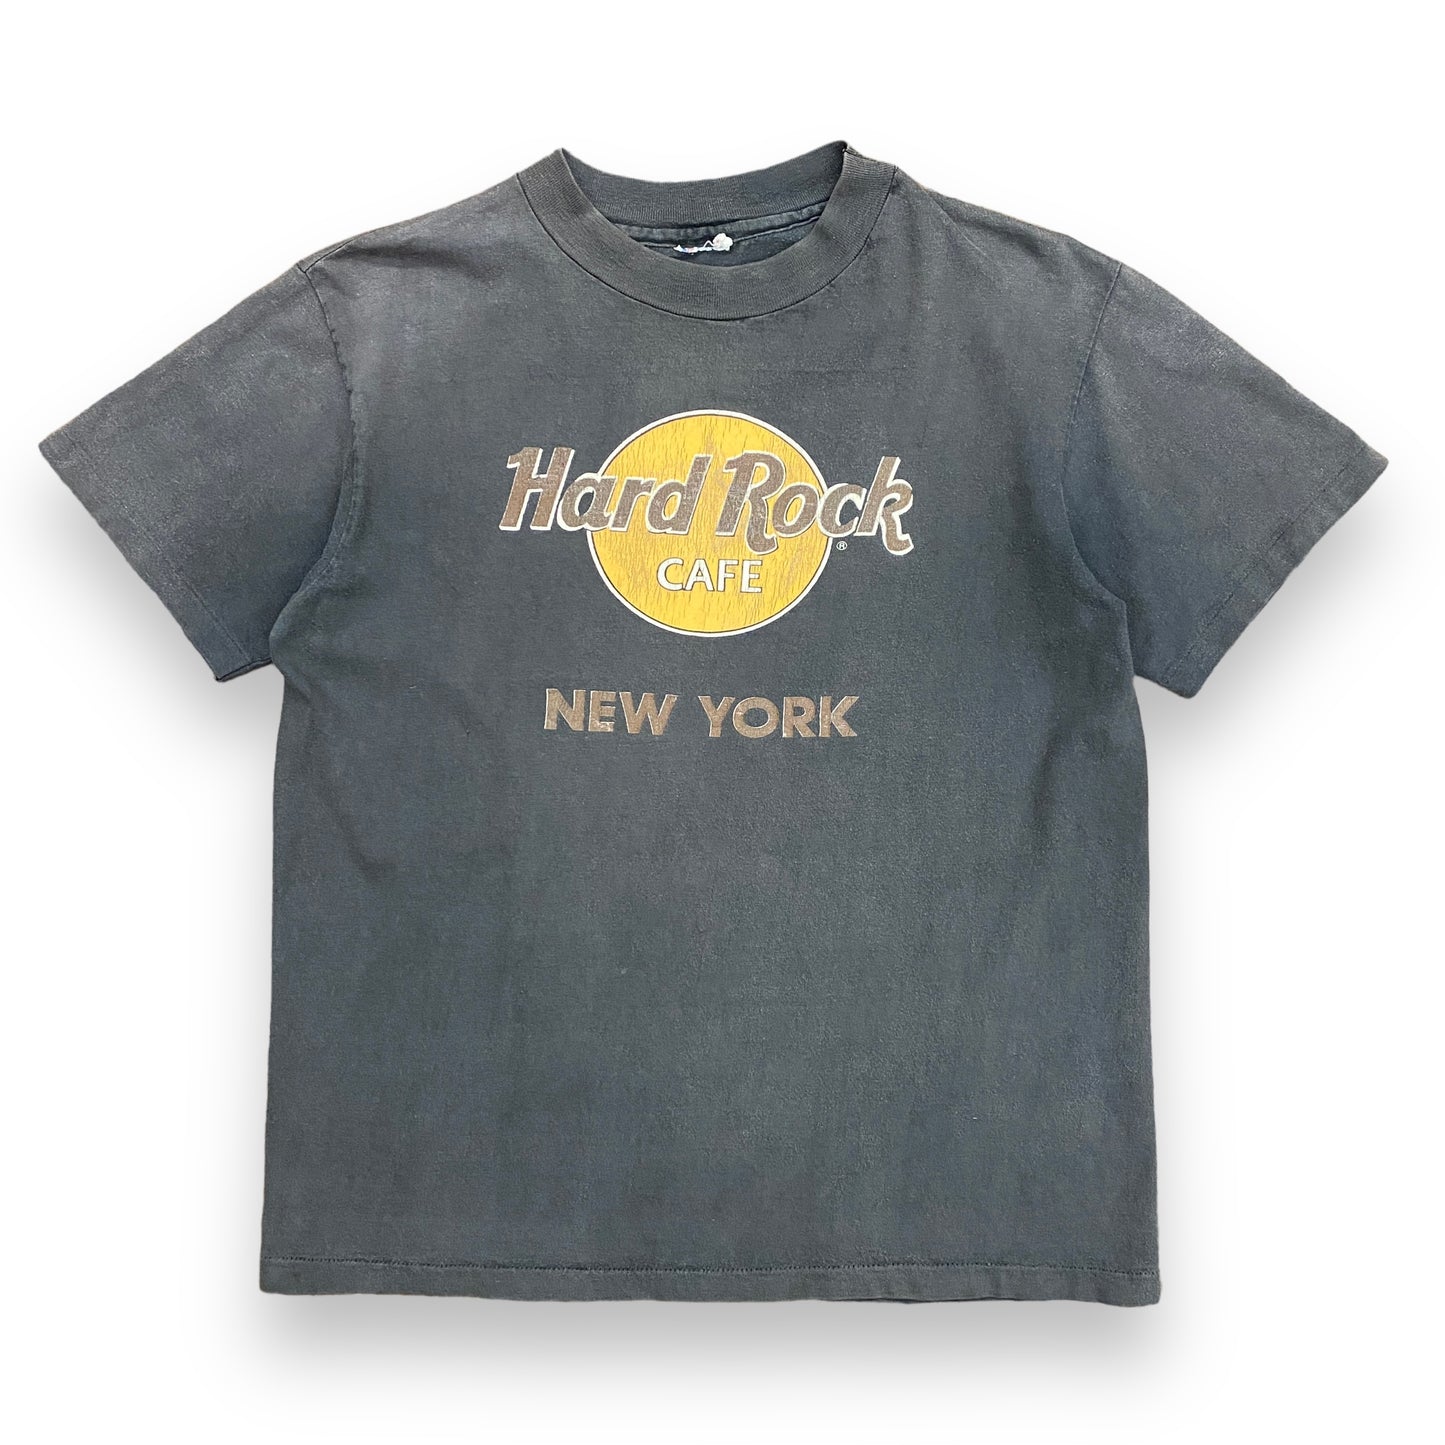 90s Hard Rock Cafe: New York Faded Tee - Size Medium